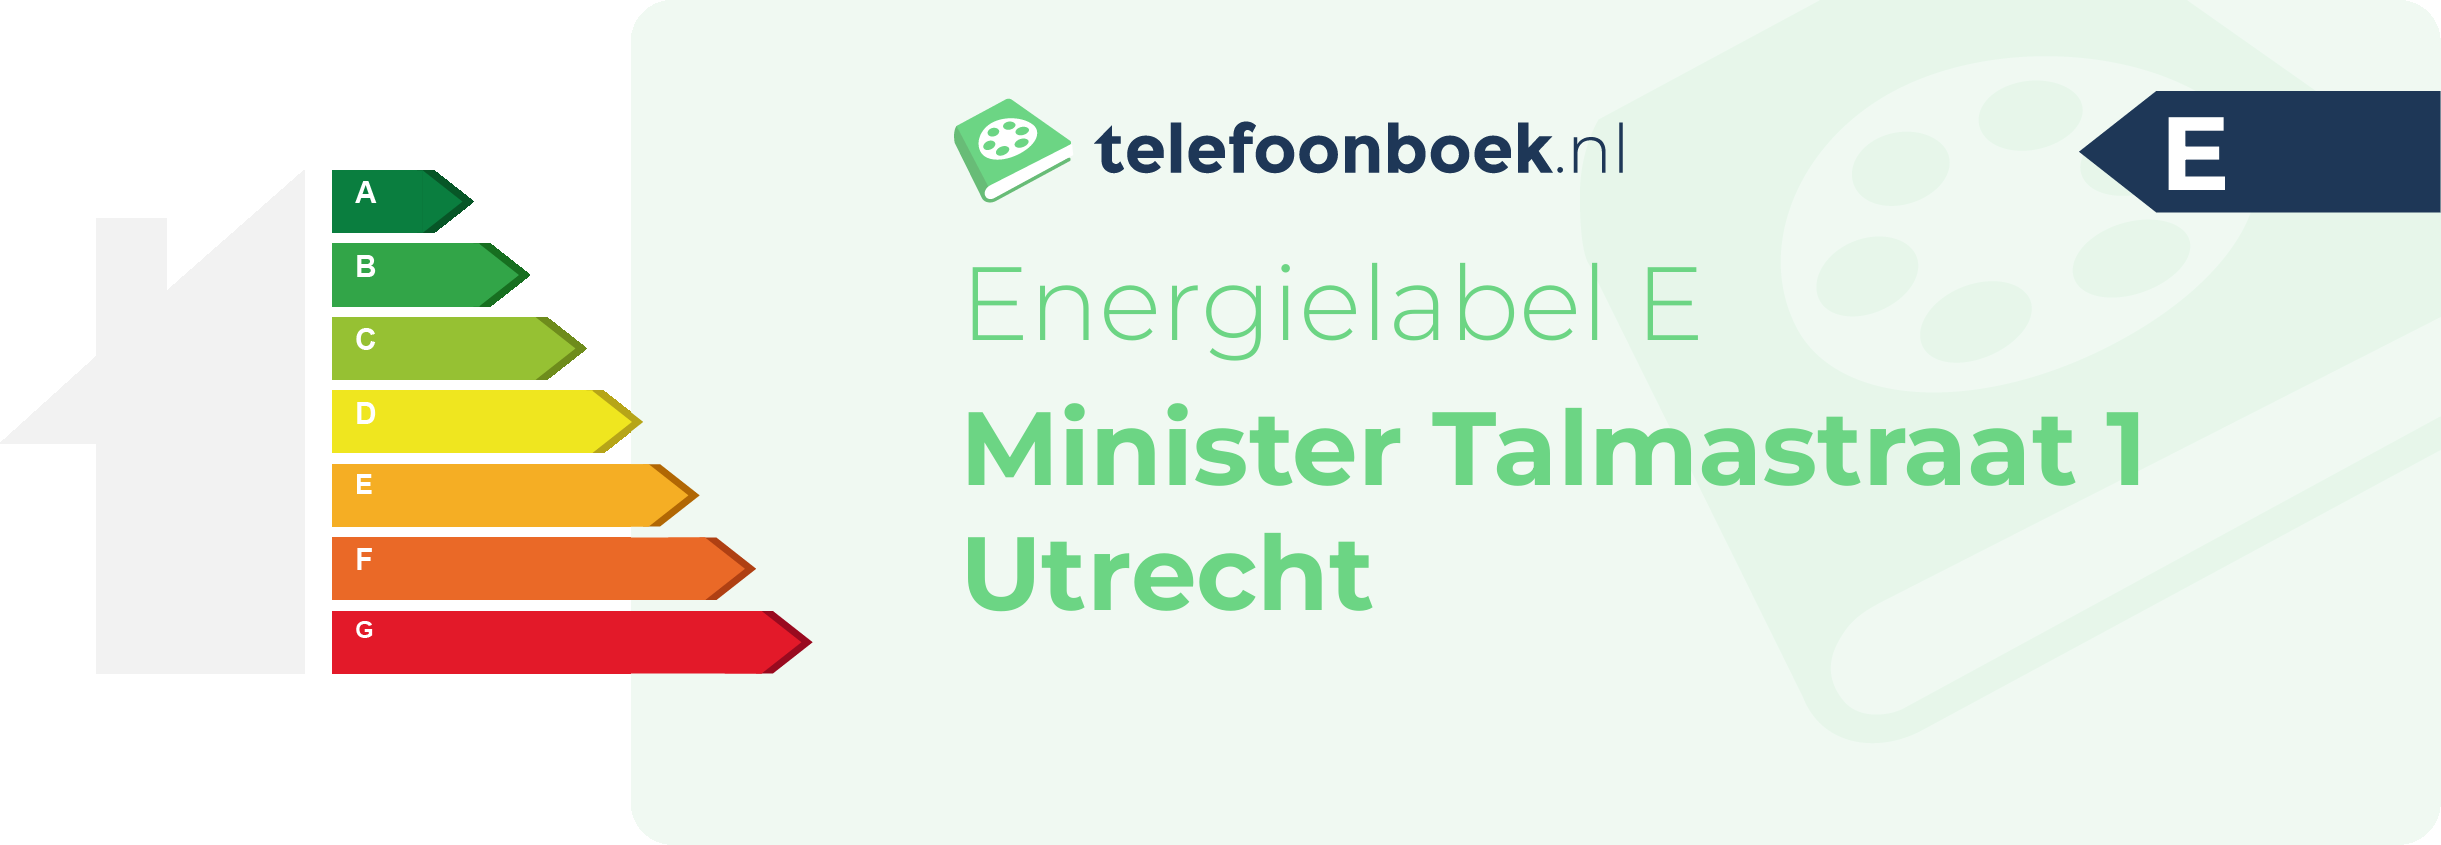 Energielabel Minister Talmastraat 1 Utrecht